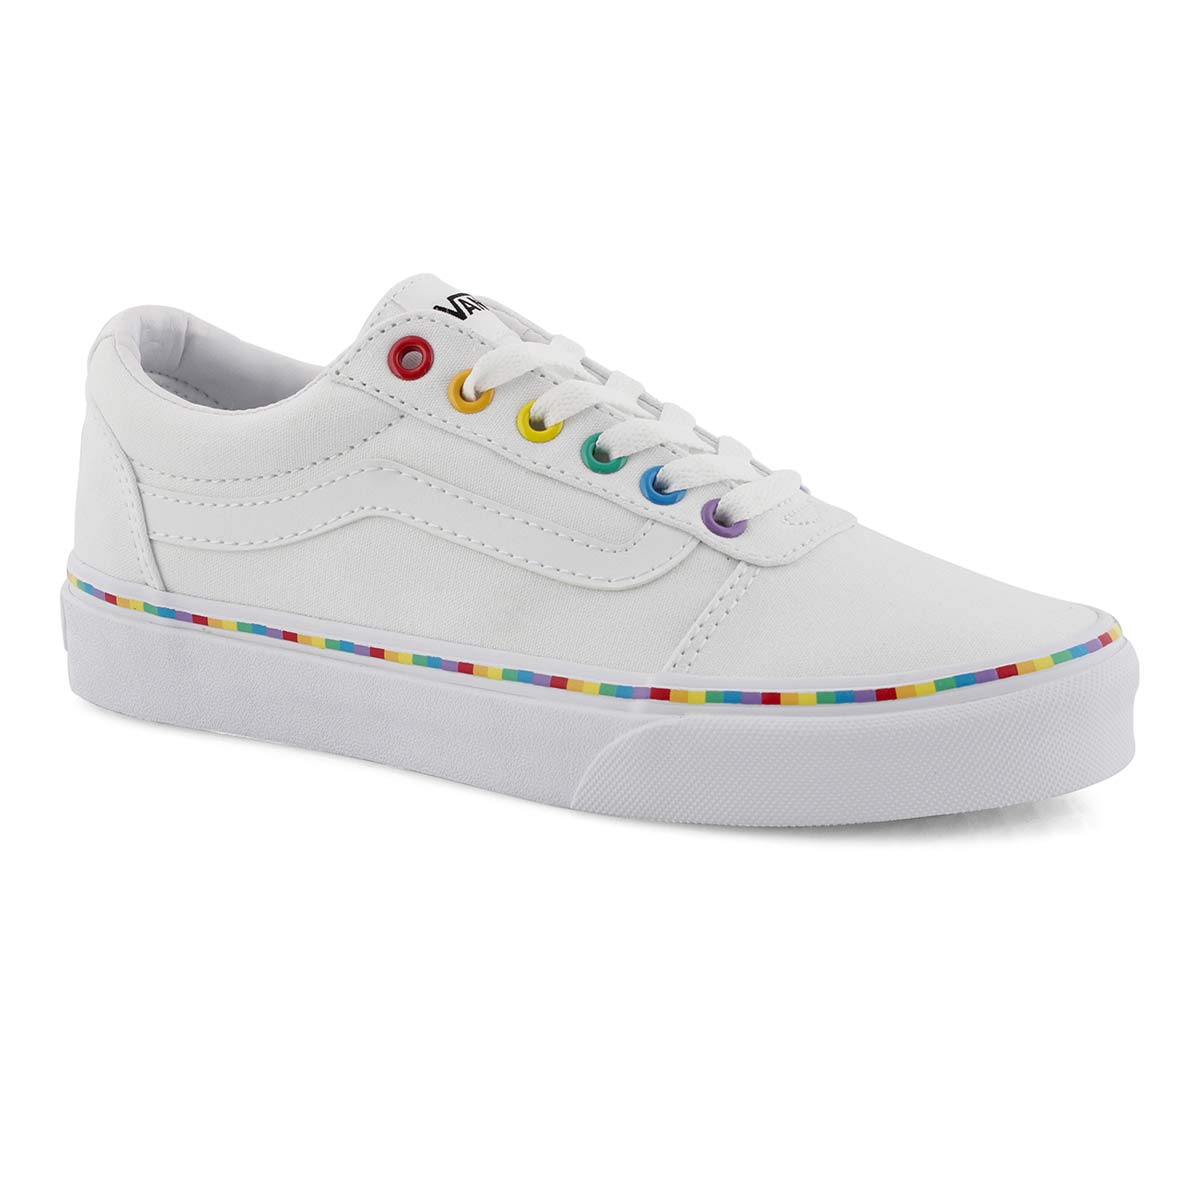 rainbow vans tennis shoes